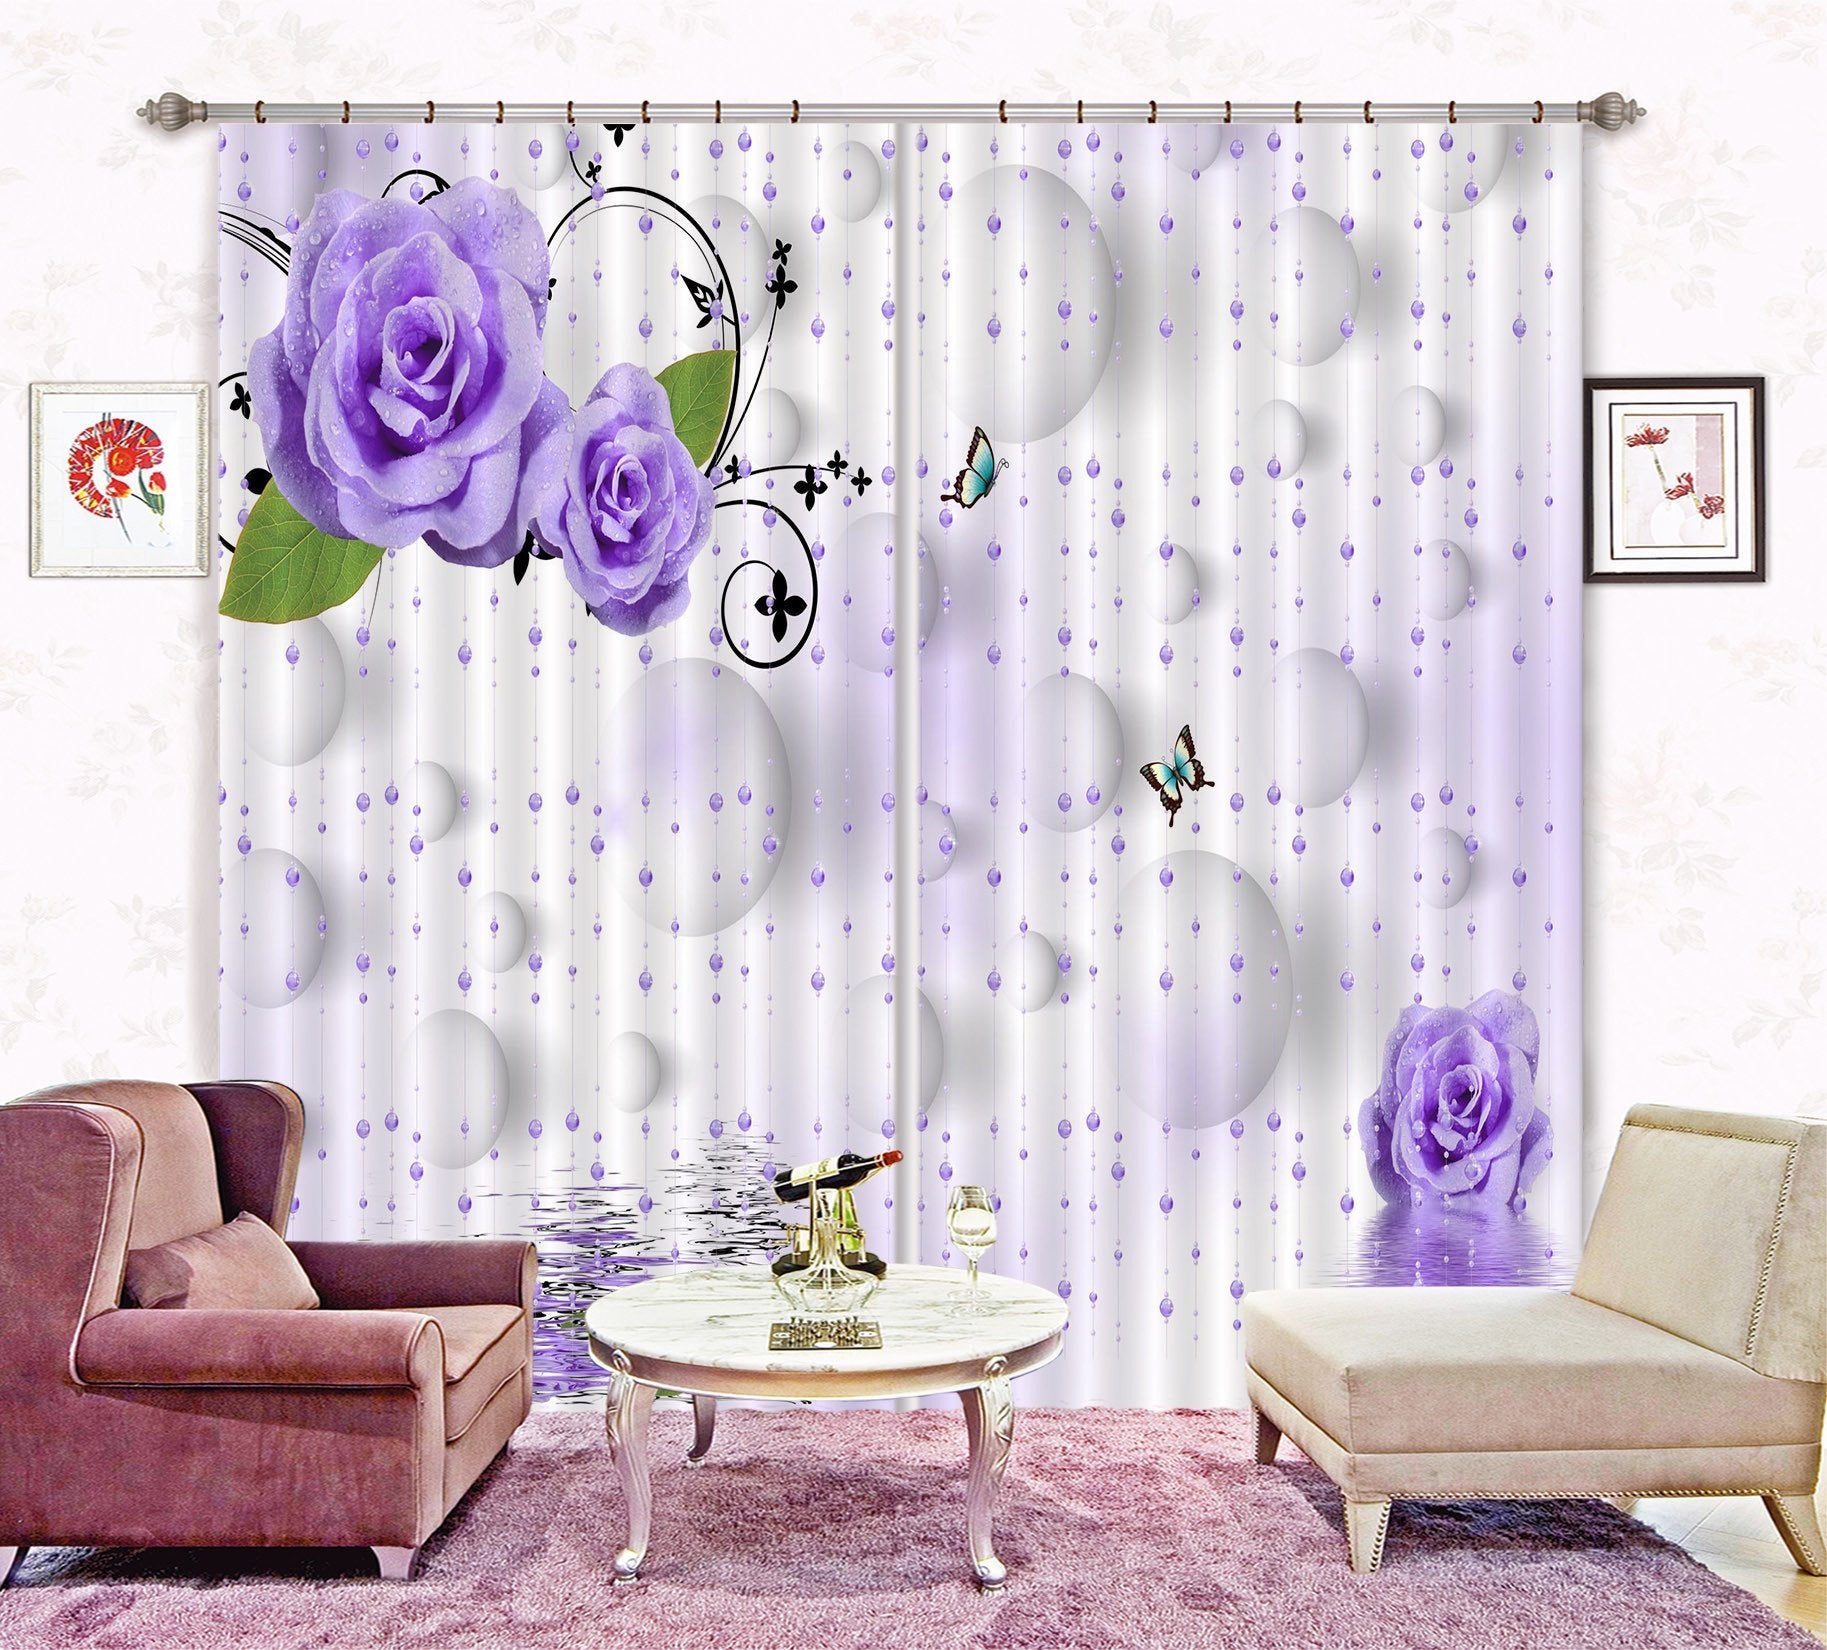 3D Bead Curtains Flowers Curtains Drapes Wallpaper AJ Wallpaper 